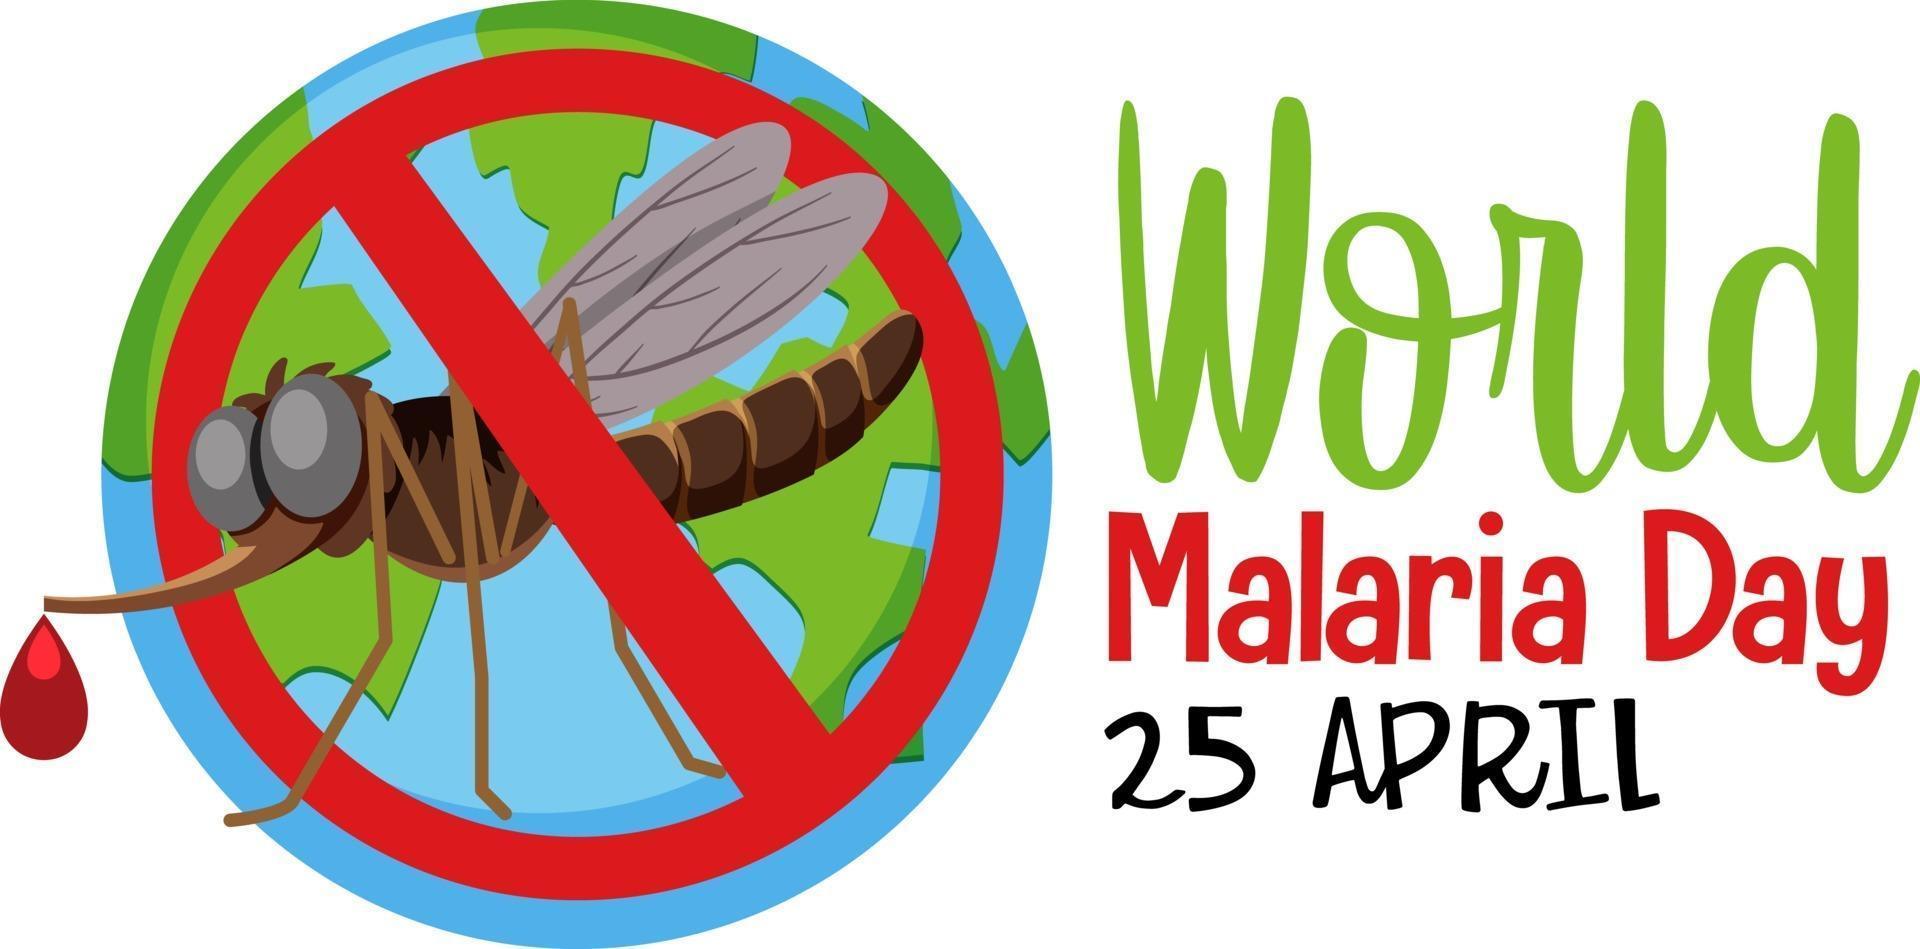 wereld malariadag zonder muggenbanner vector